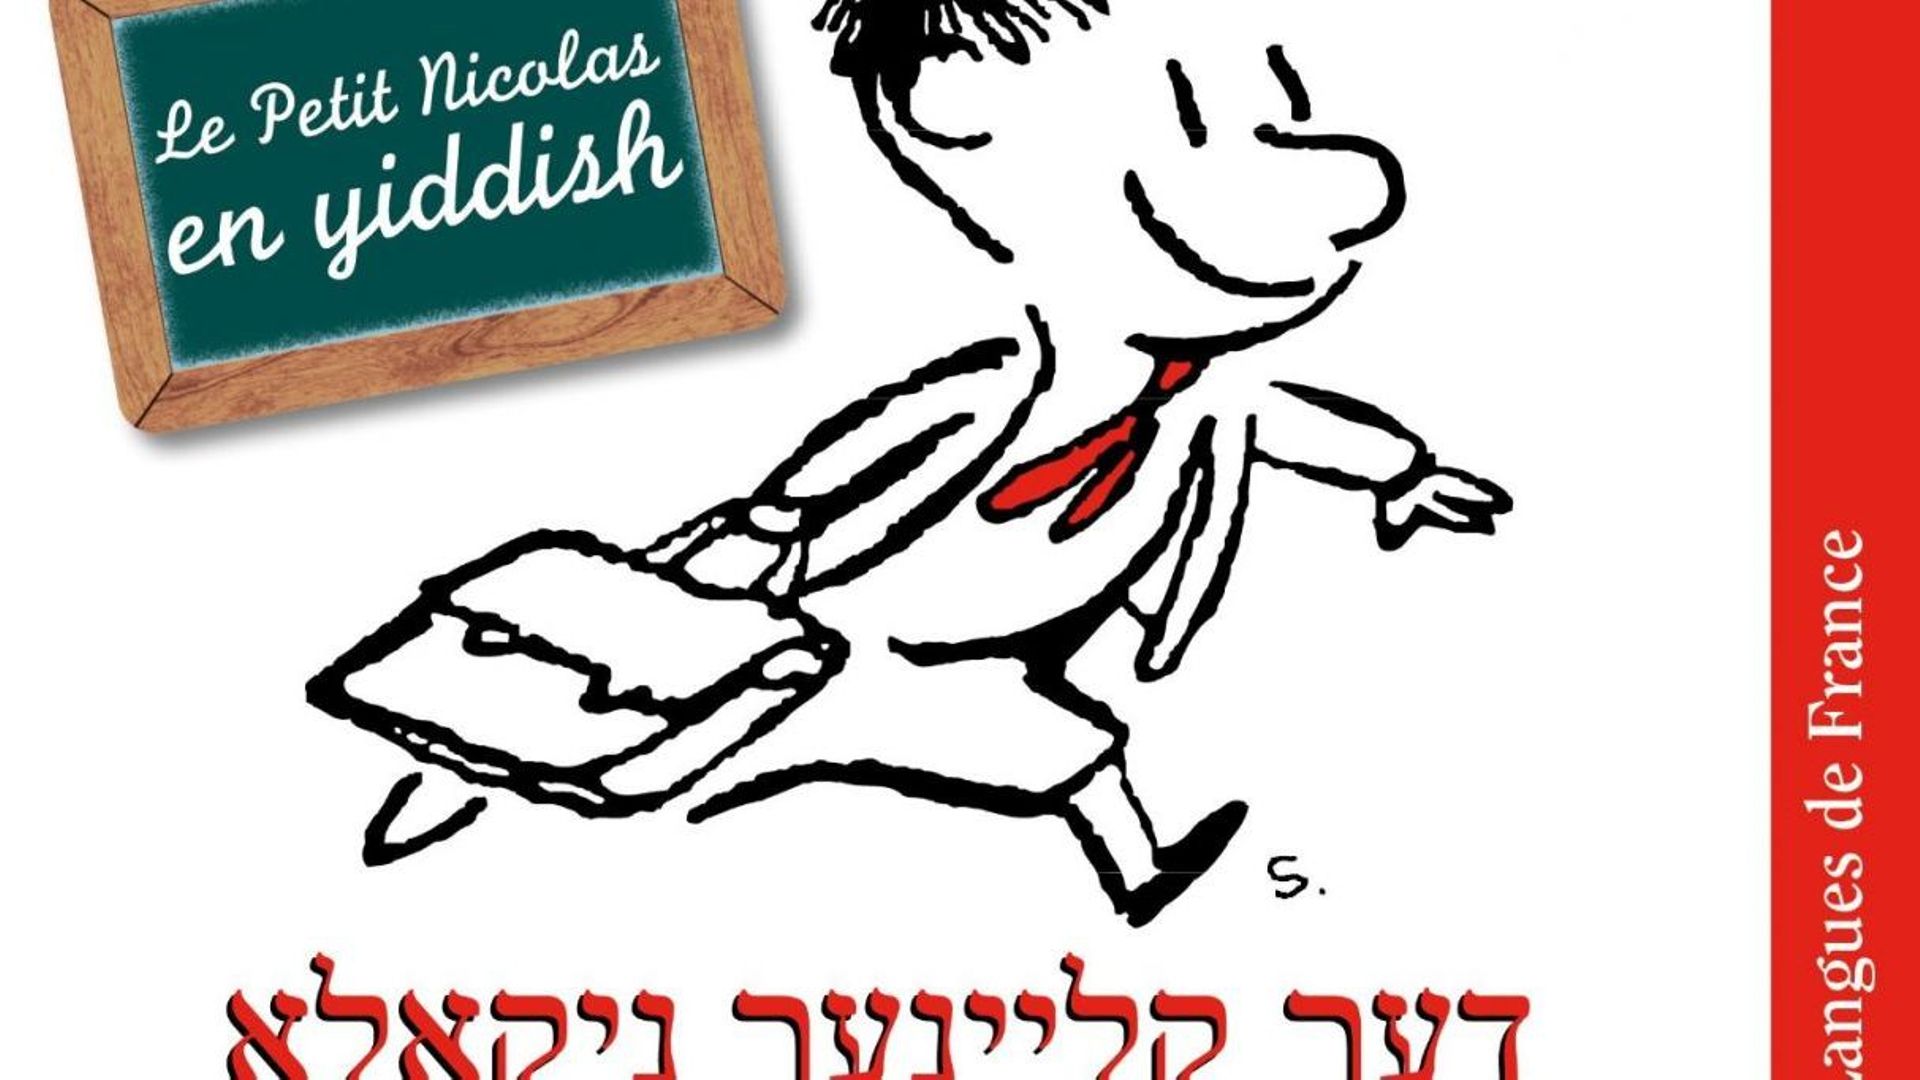 "Le petit Nicolas" en yiddish